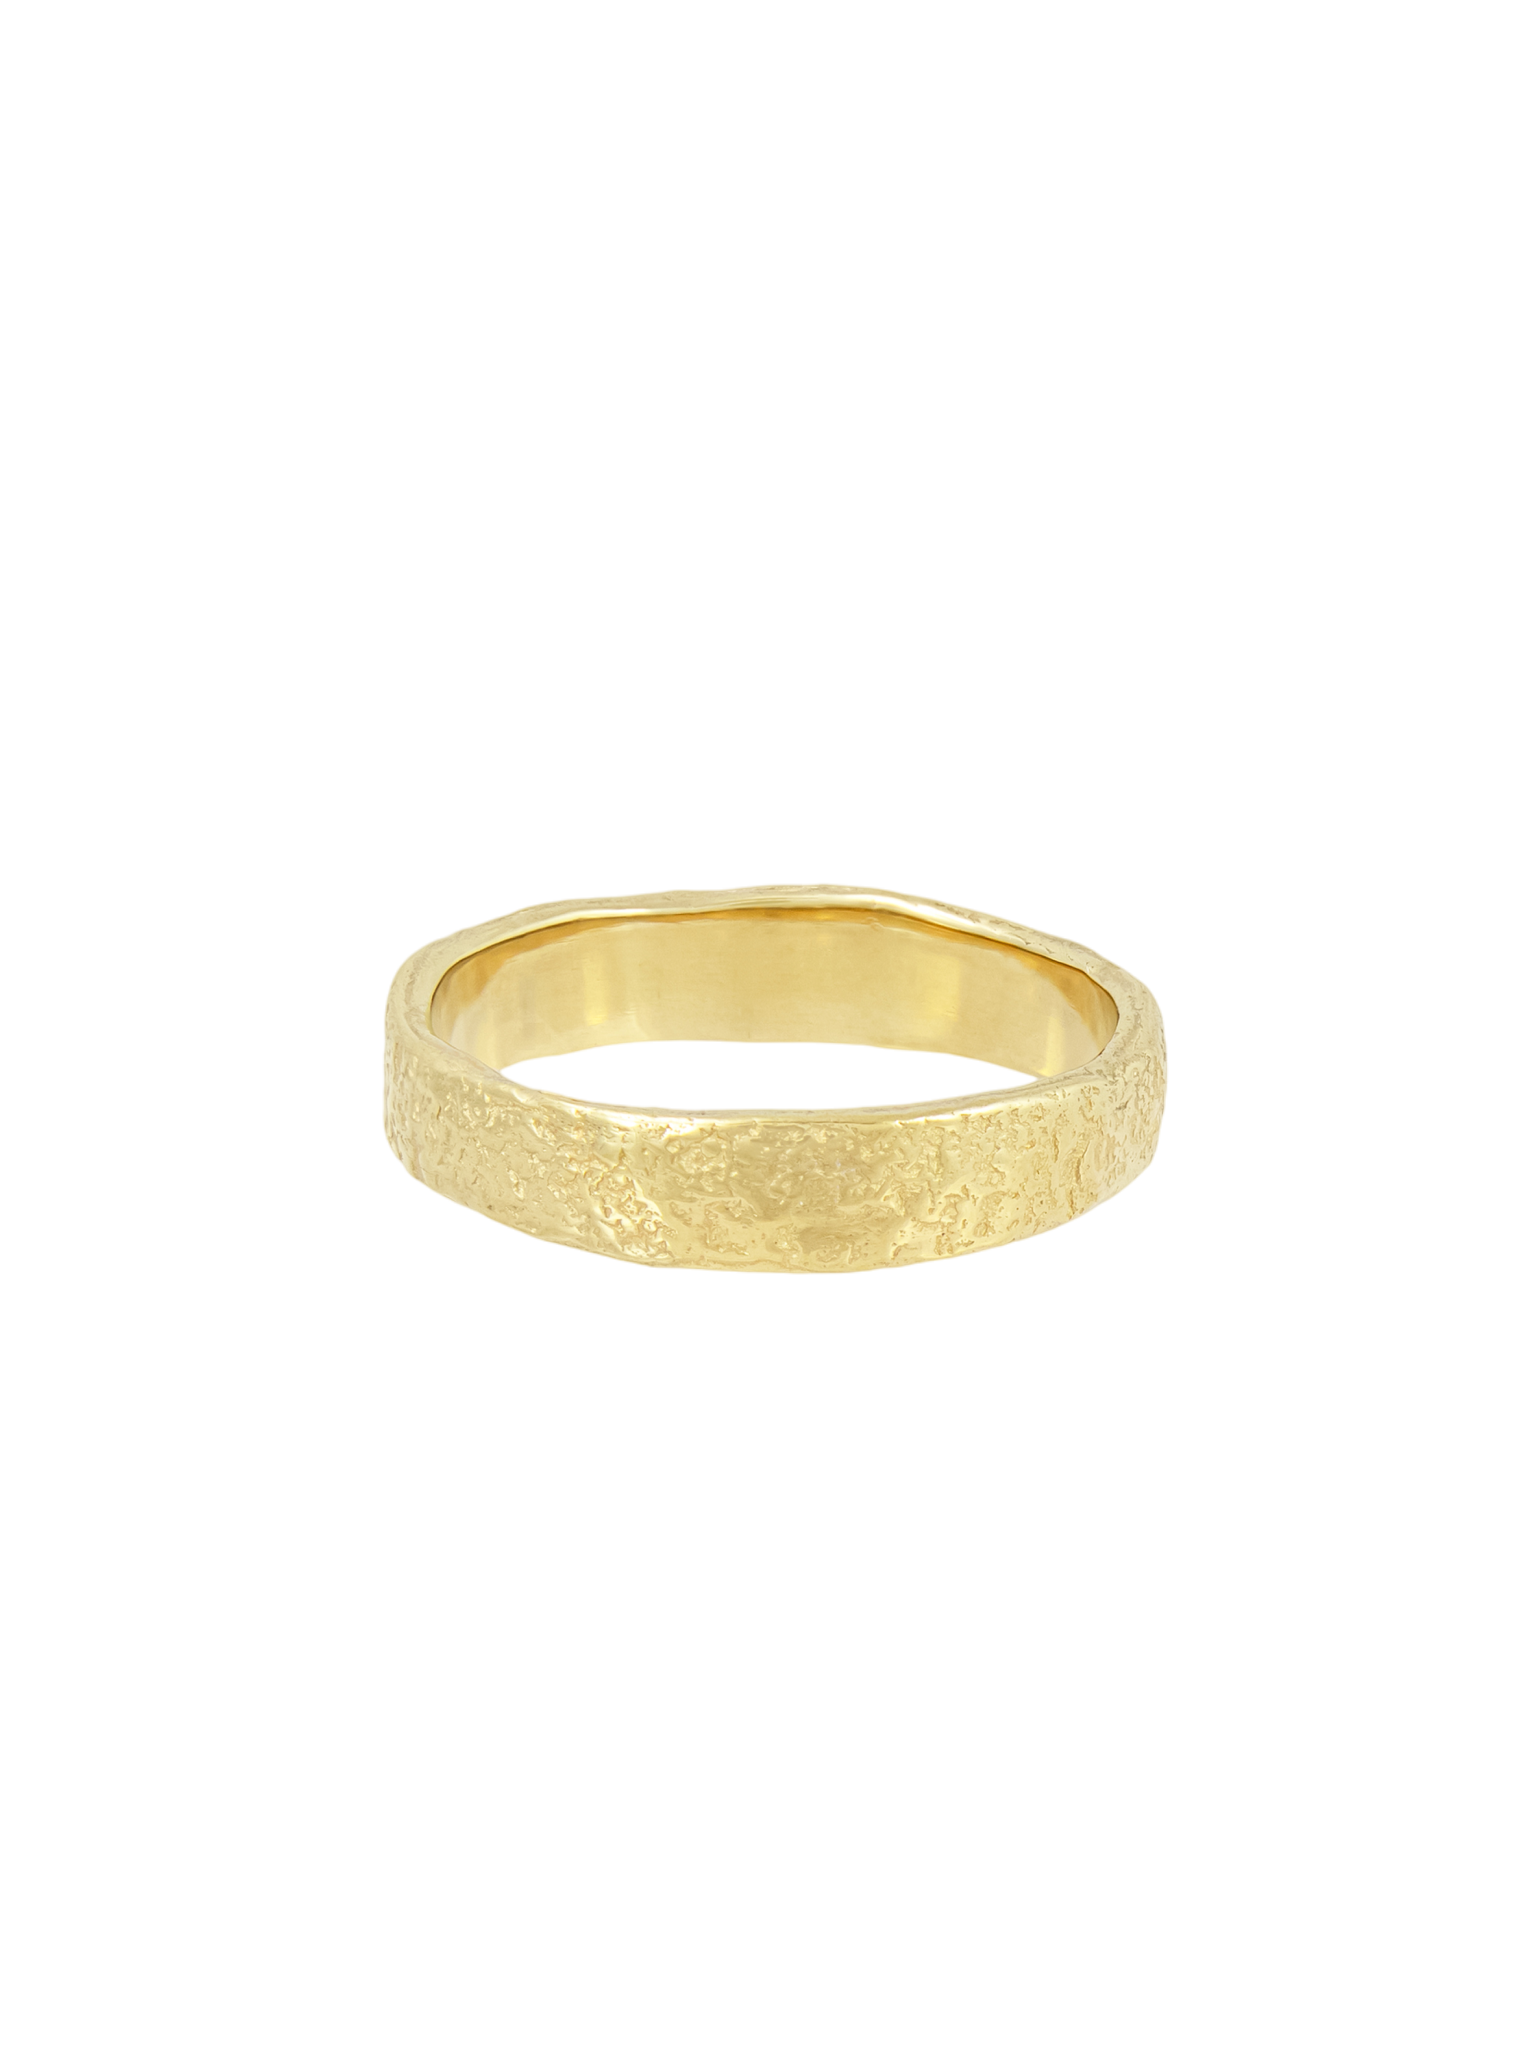 4.5mm organic textured wedding ring